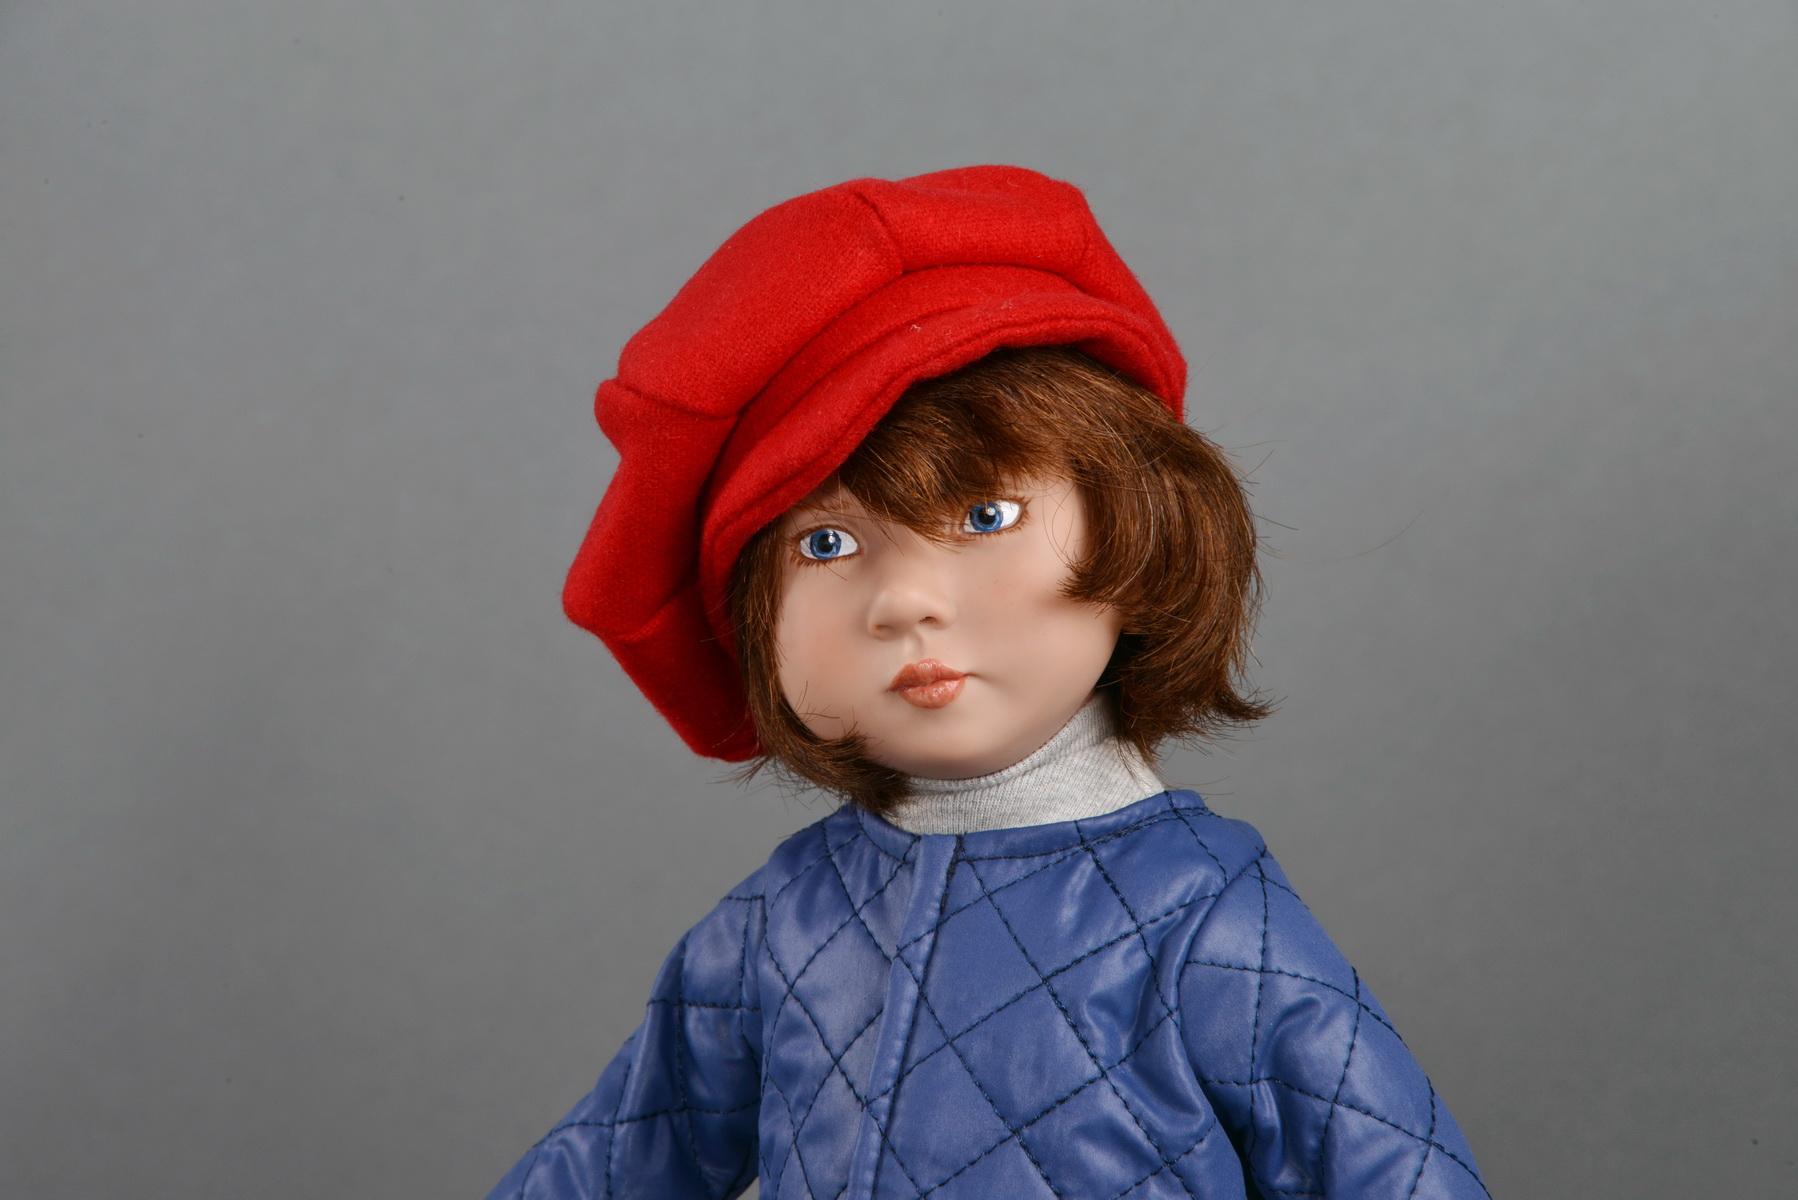 Игровая кукла Gustav, Zwergnase 2016 год. Рост 50 см.